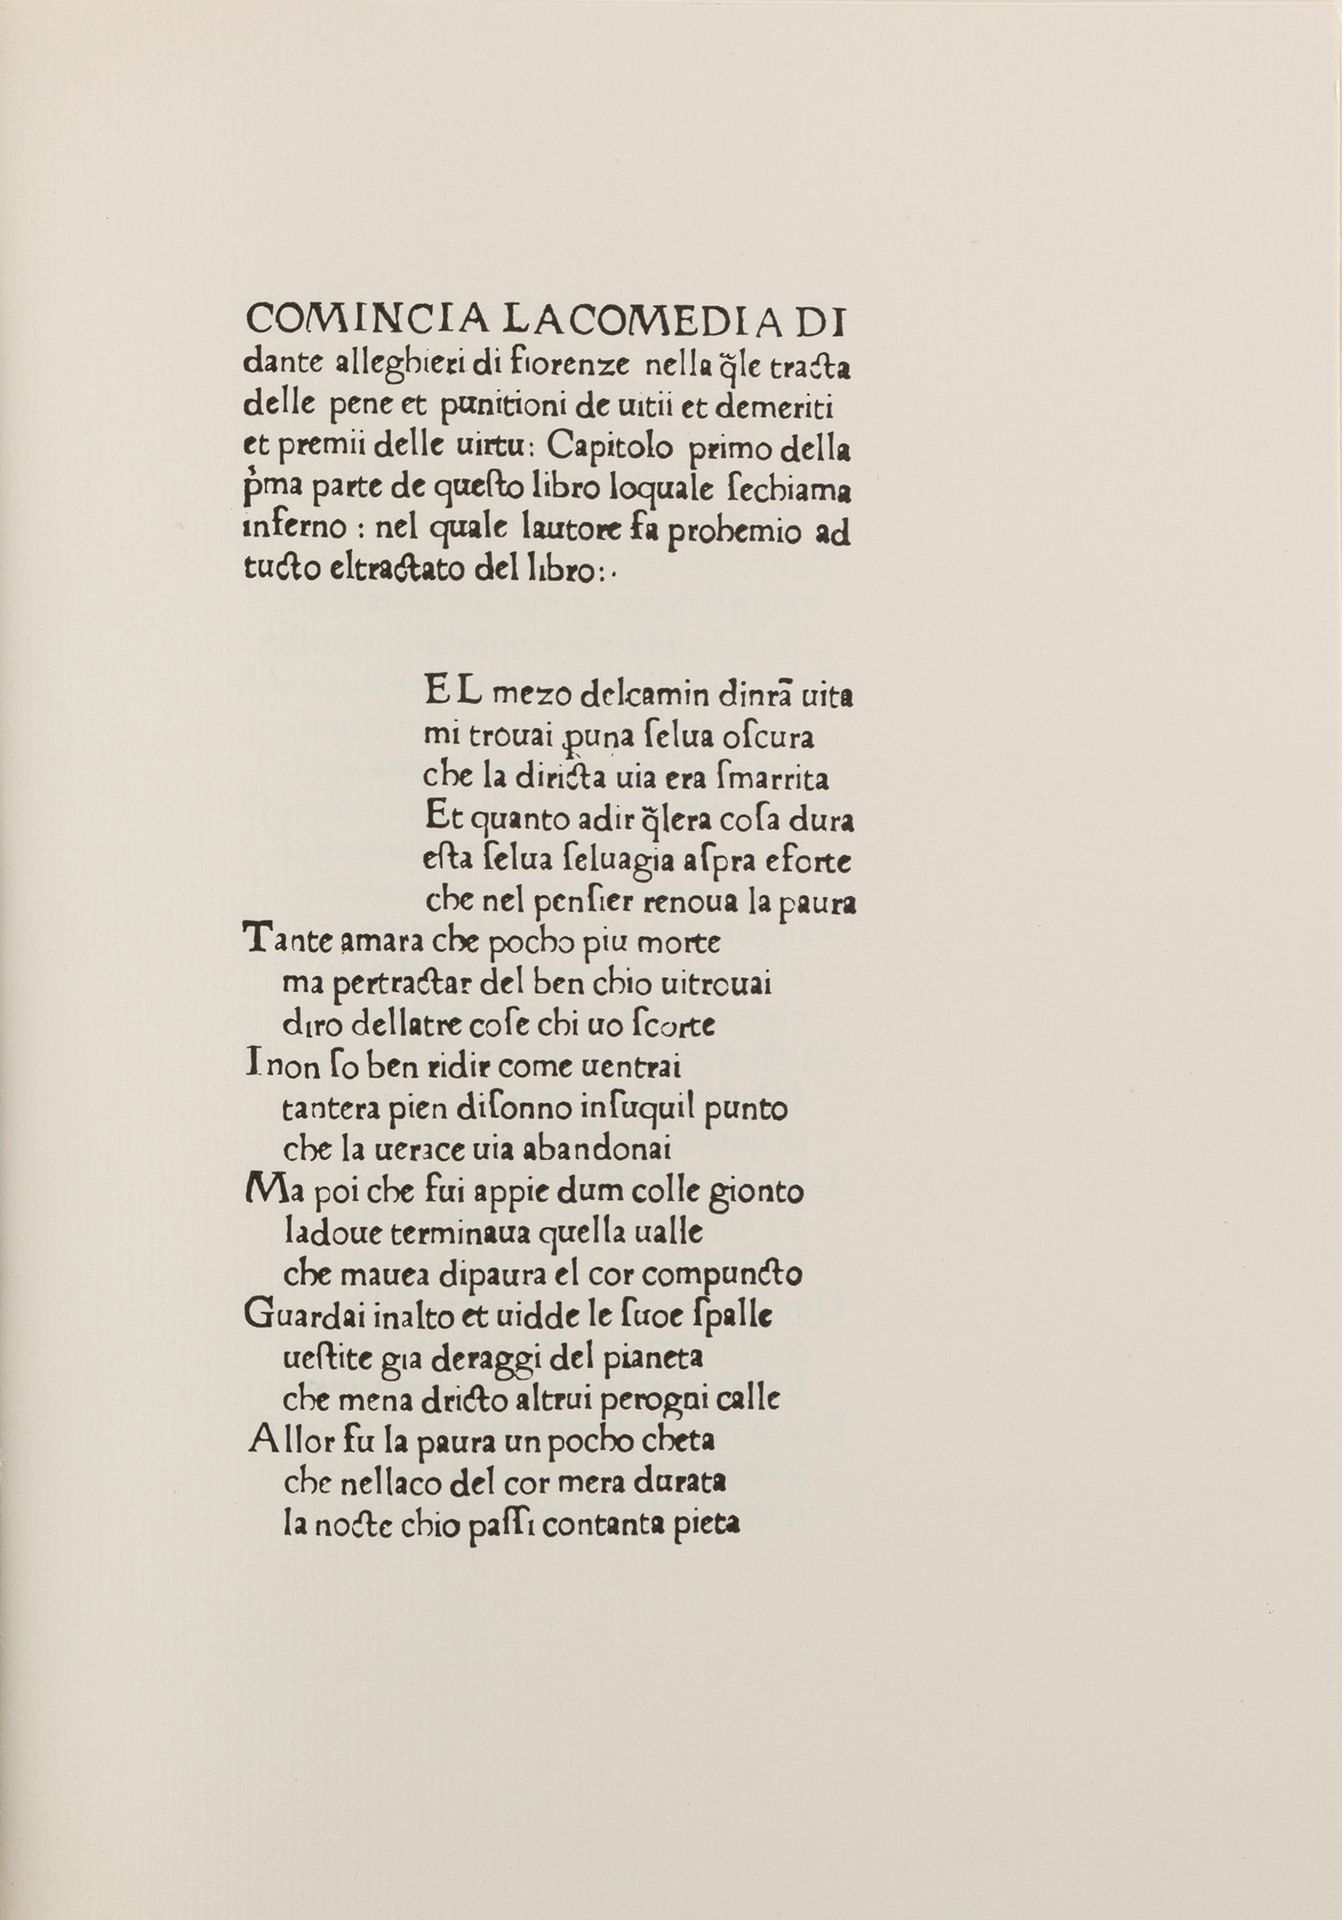 DANTE ALIGHIERI Alighieri, Dante - La Comedia de dante alleghieri

Ravenna, Edic&hellip;